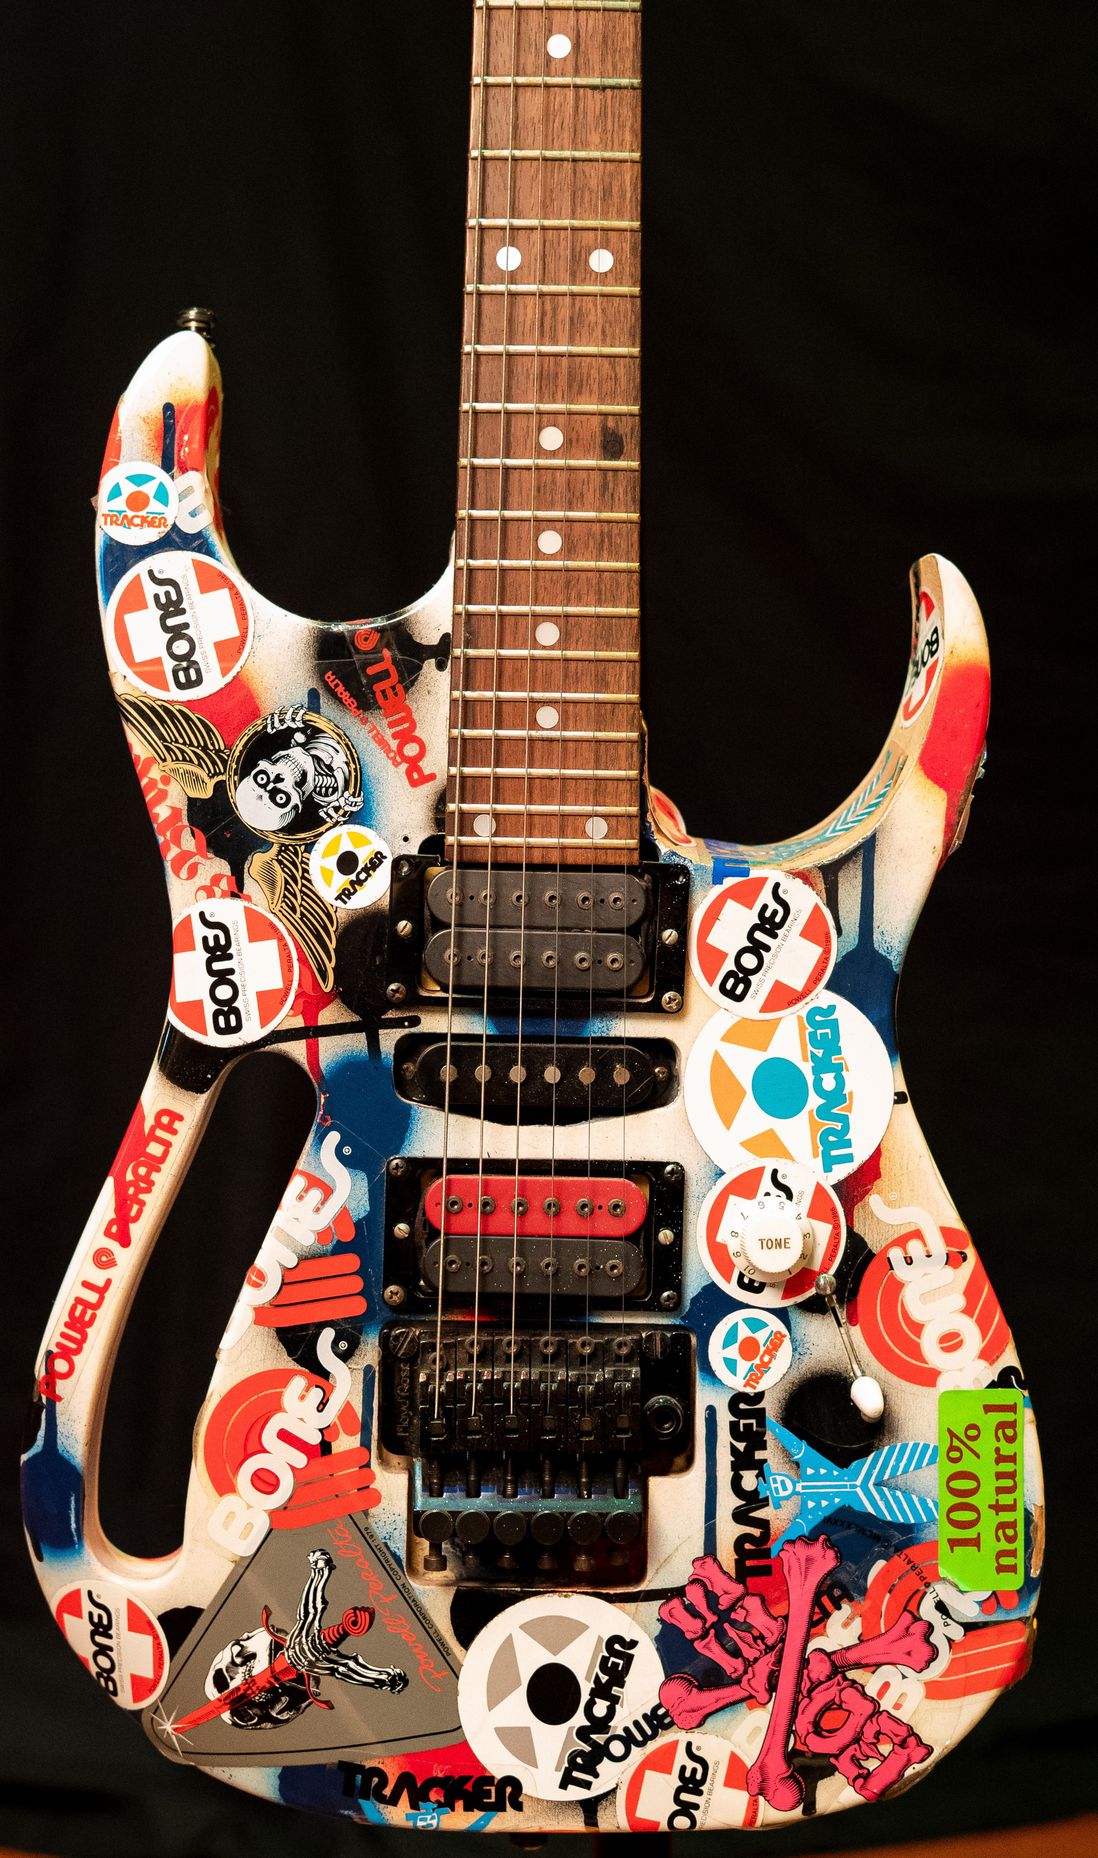 Steve Vai's Performance Guitar, nicknamed "Bones."